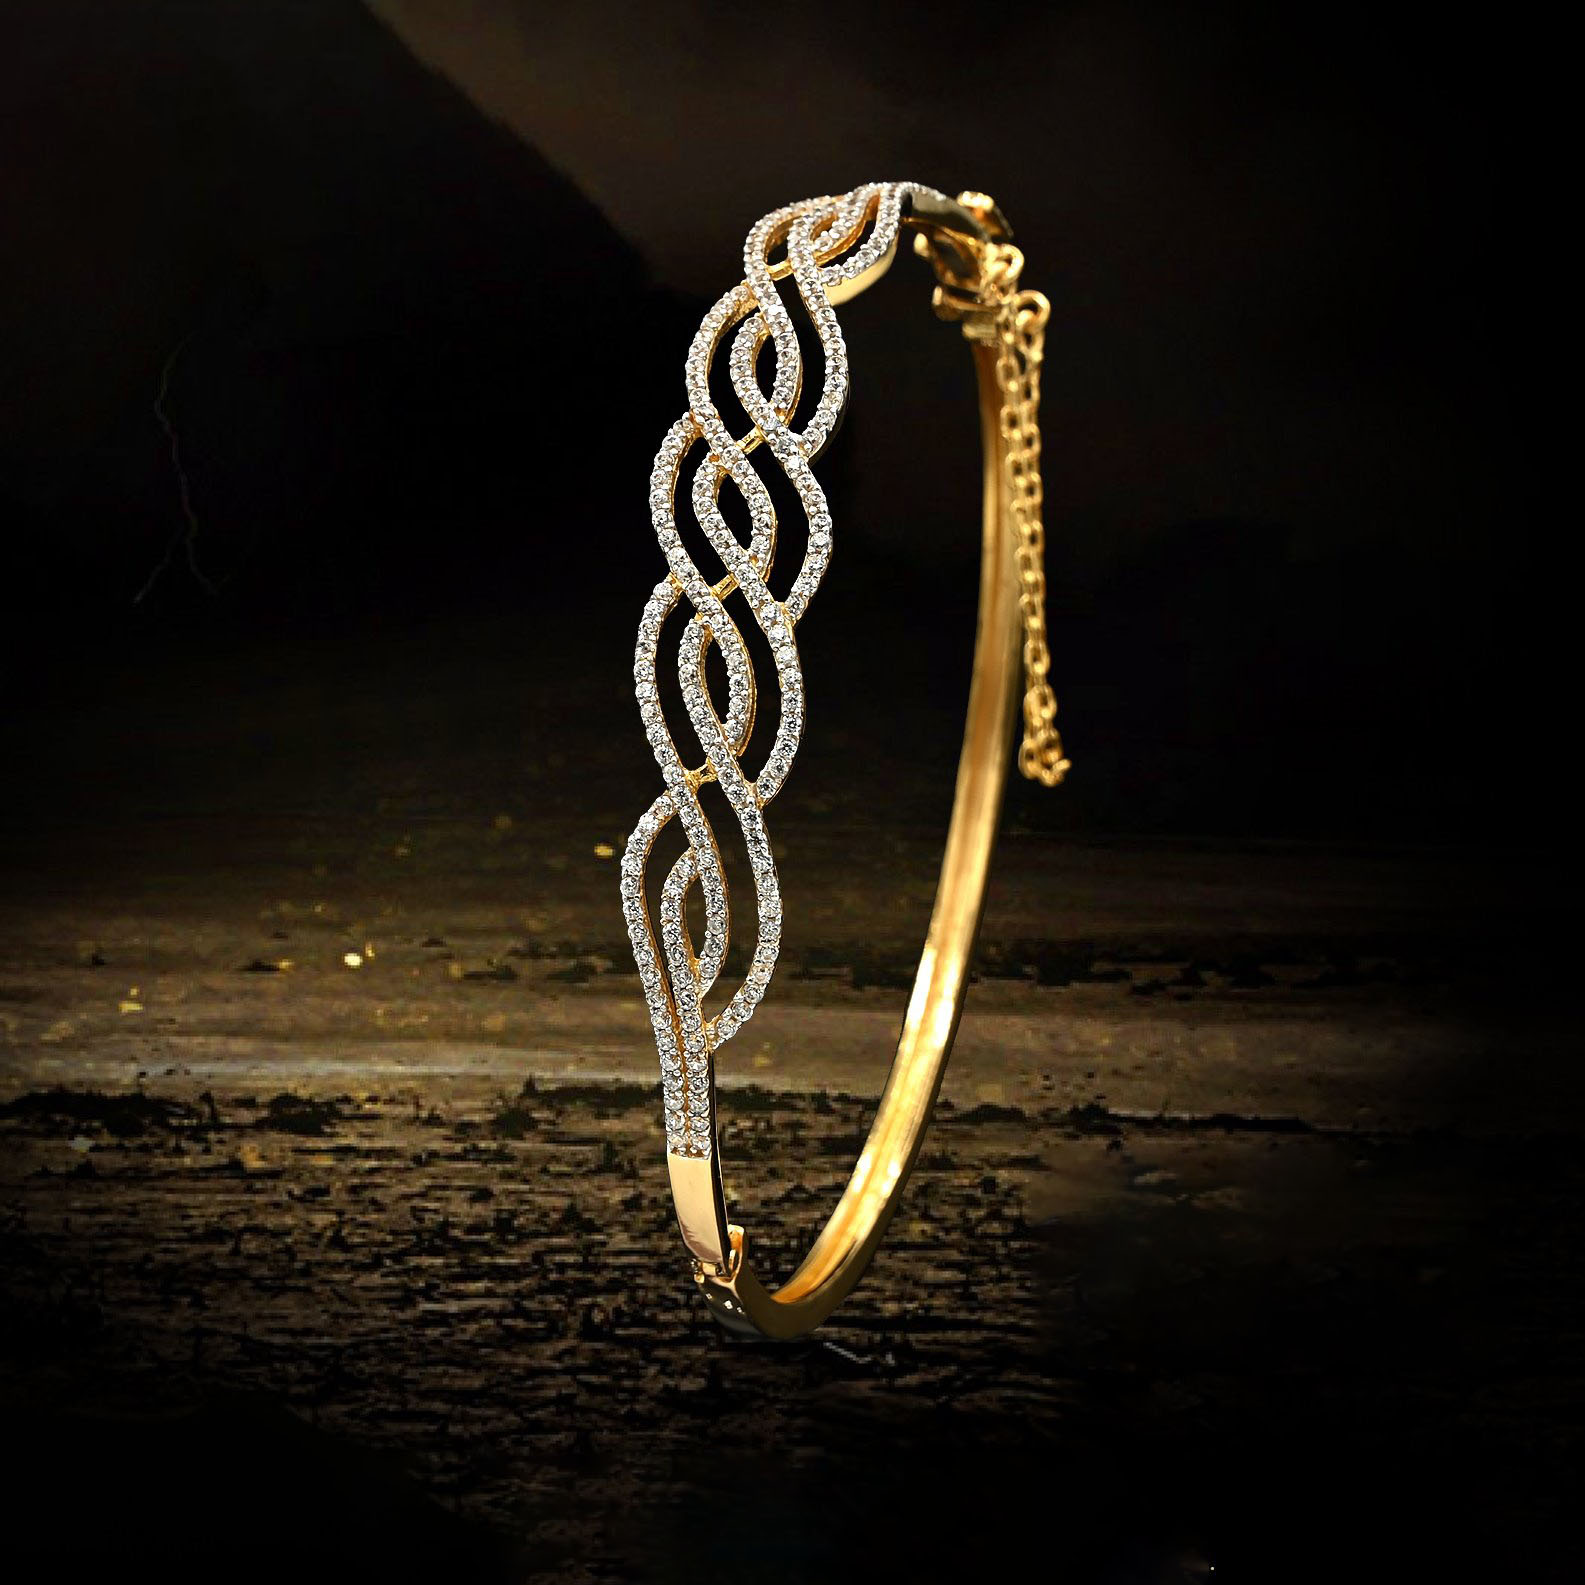 Bracelets for Women - Luxury Gold, Silver Bangles & Cuffs | LOUIS VUITTON ®